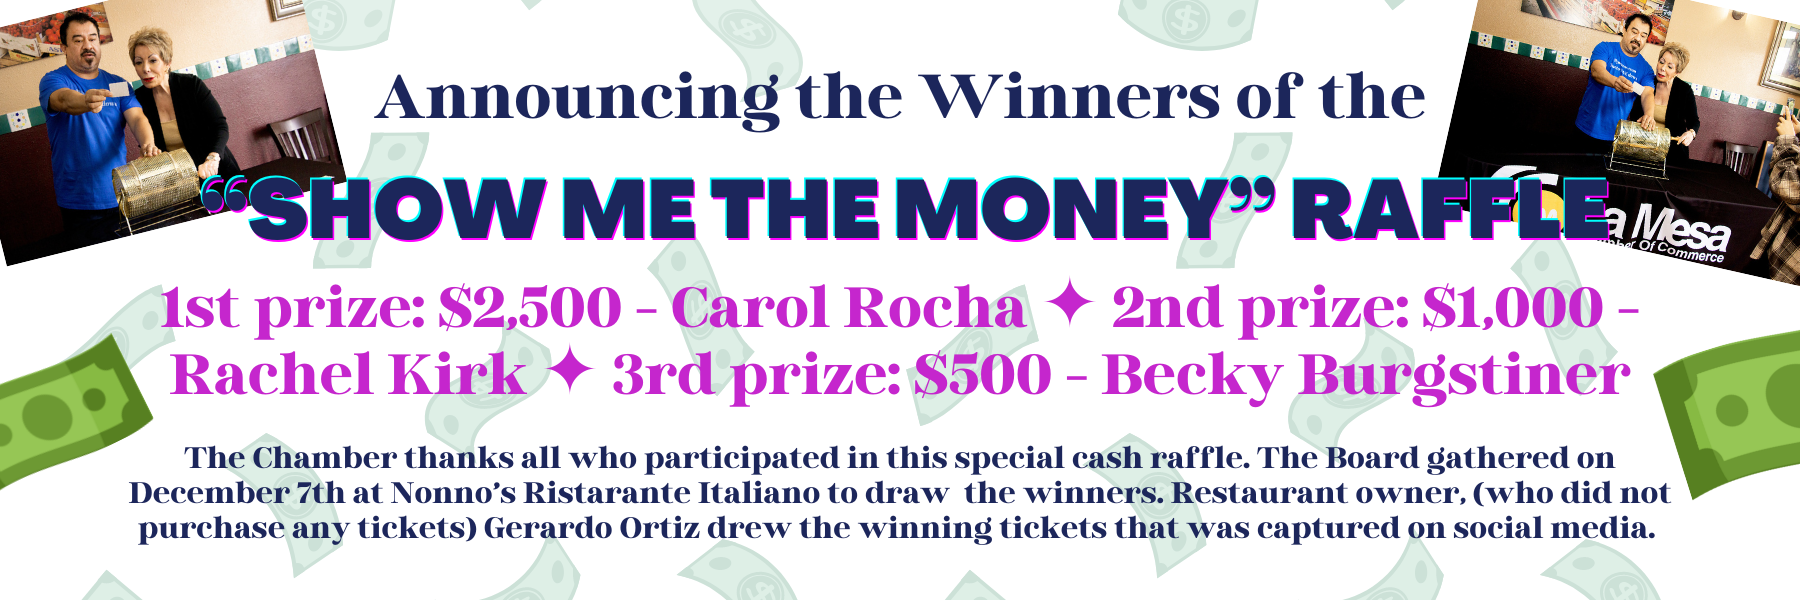 Show Me the Money Raffle Winners Announcement